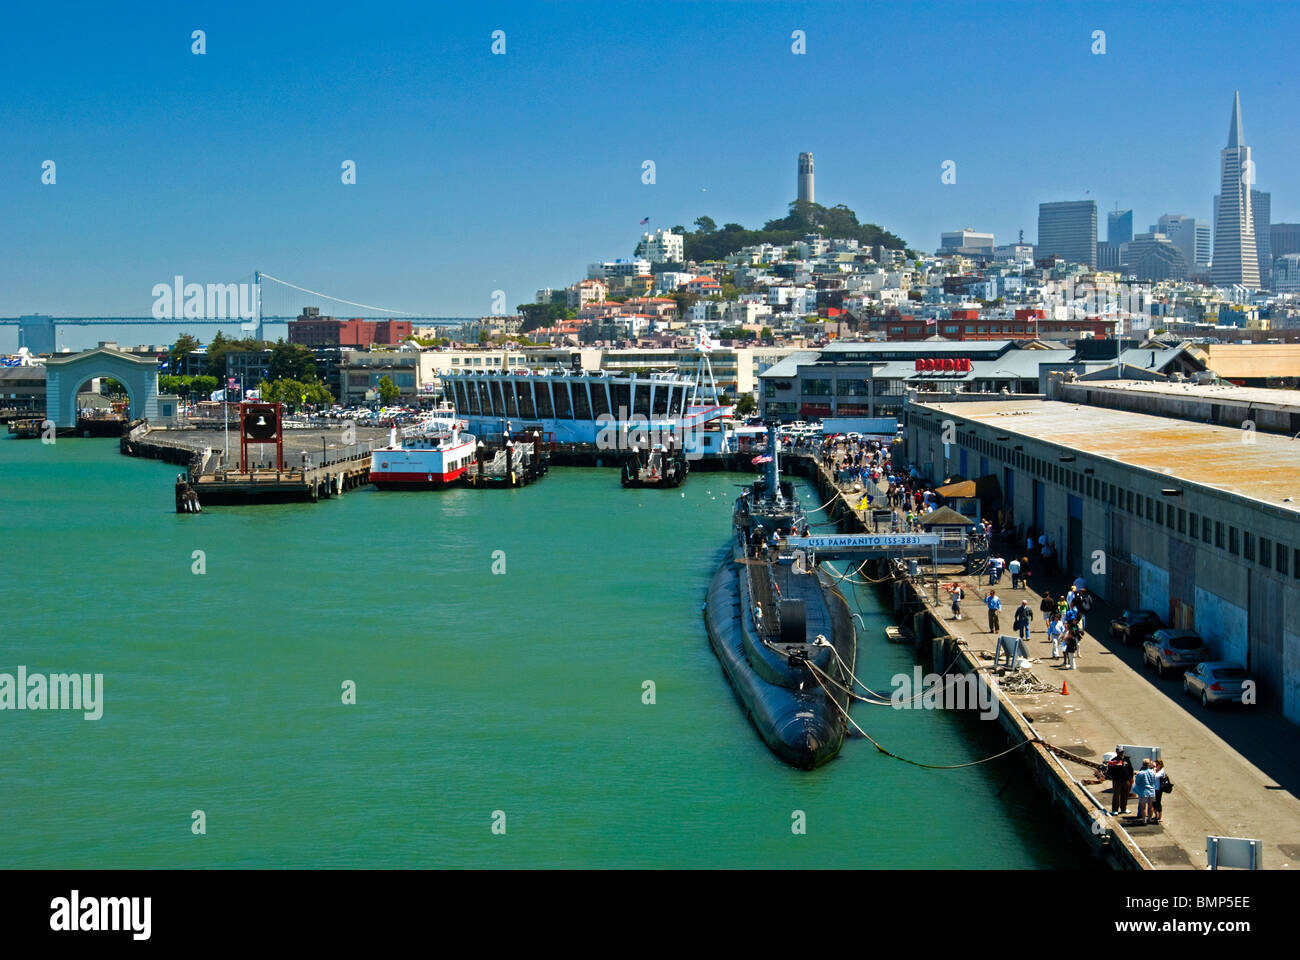 USA-Kalifornien-San Francisco Waterfront Pier 39 Bank of Amercia Coit Turm des Gebäudes Fishermans Wharf U.S.S Pampanito u-Boot Stockfoto